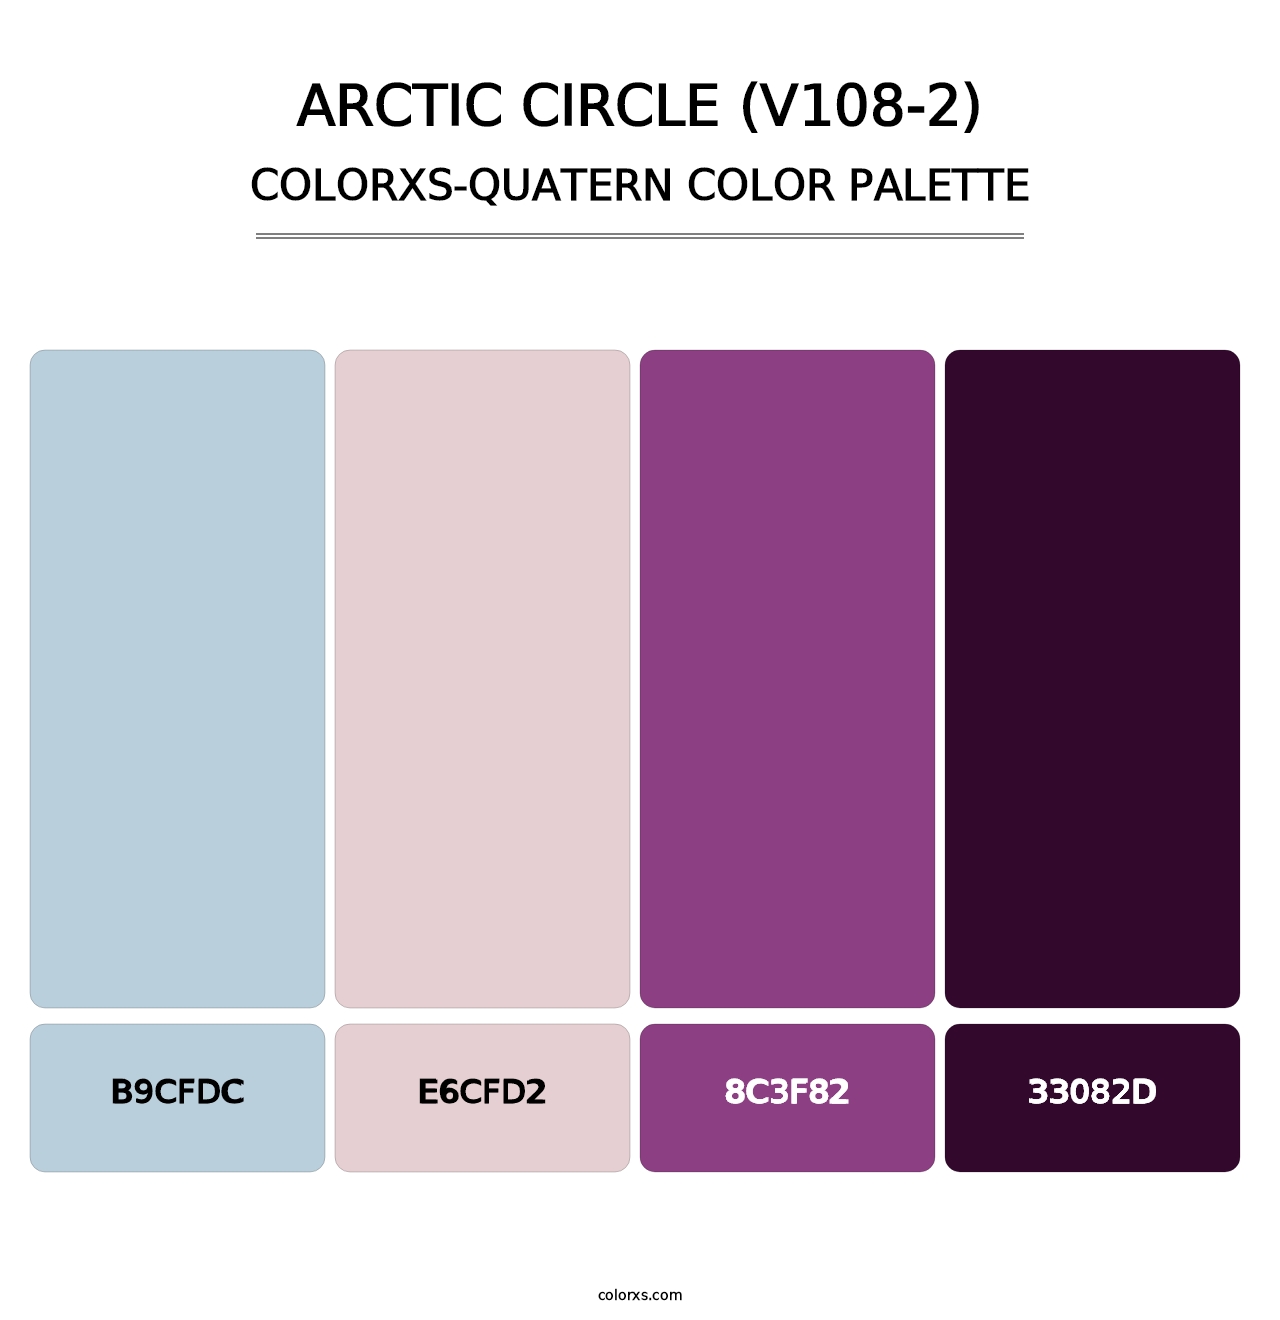 Arctic Circle (V108-2) - Colorxs Quatern Palette